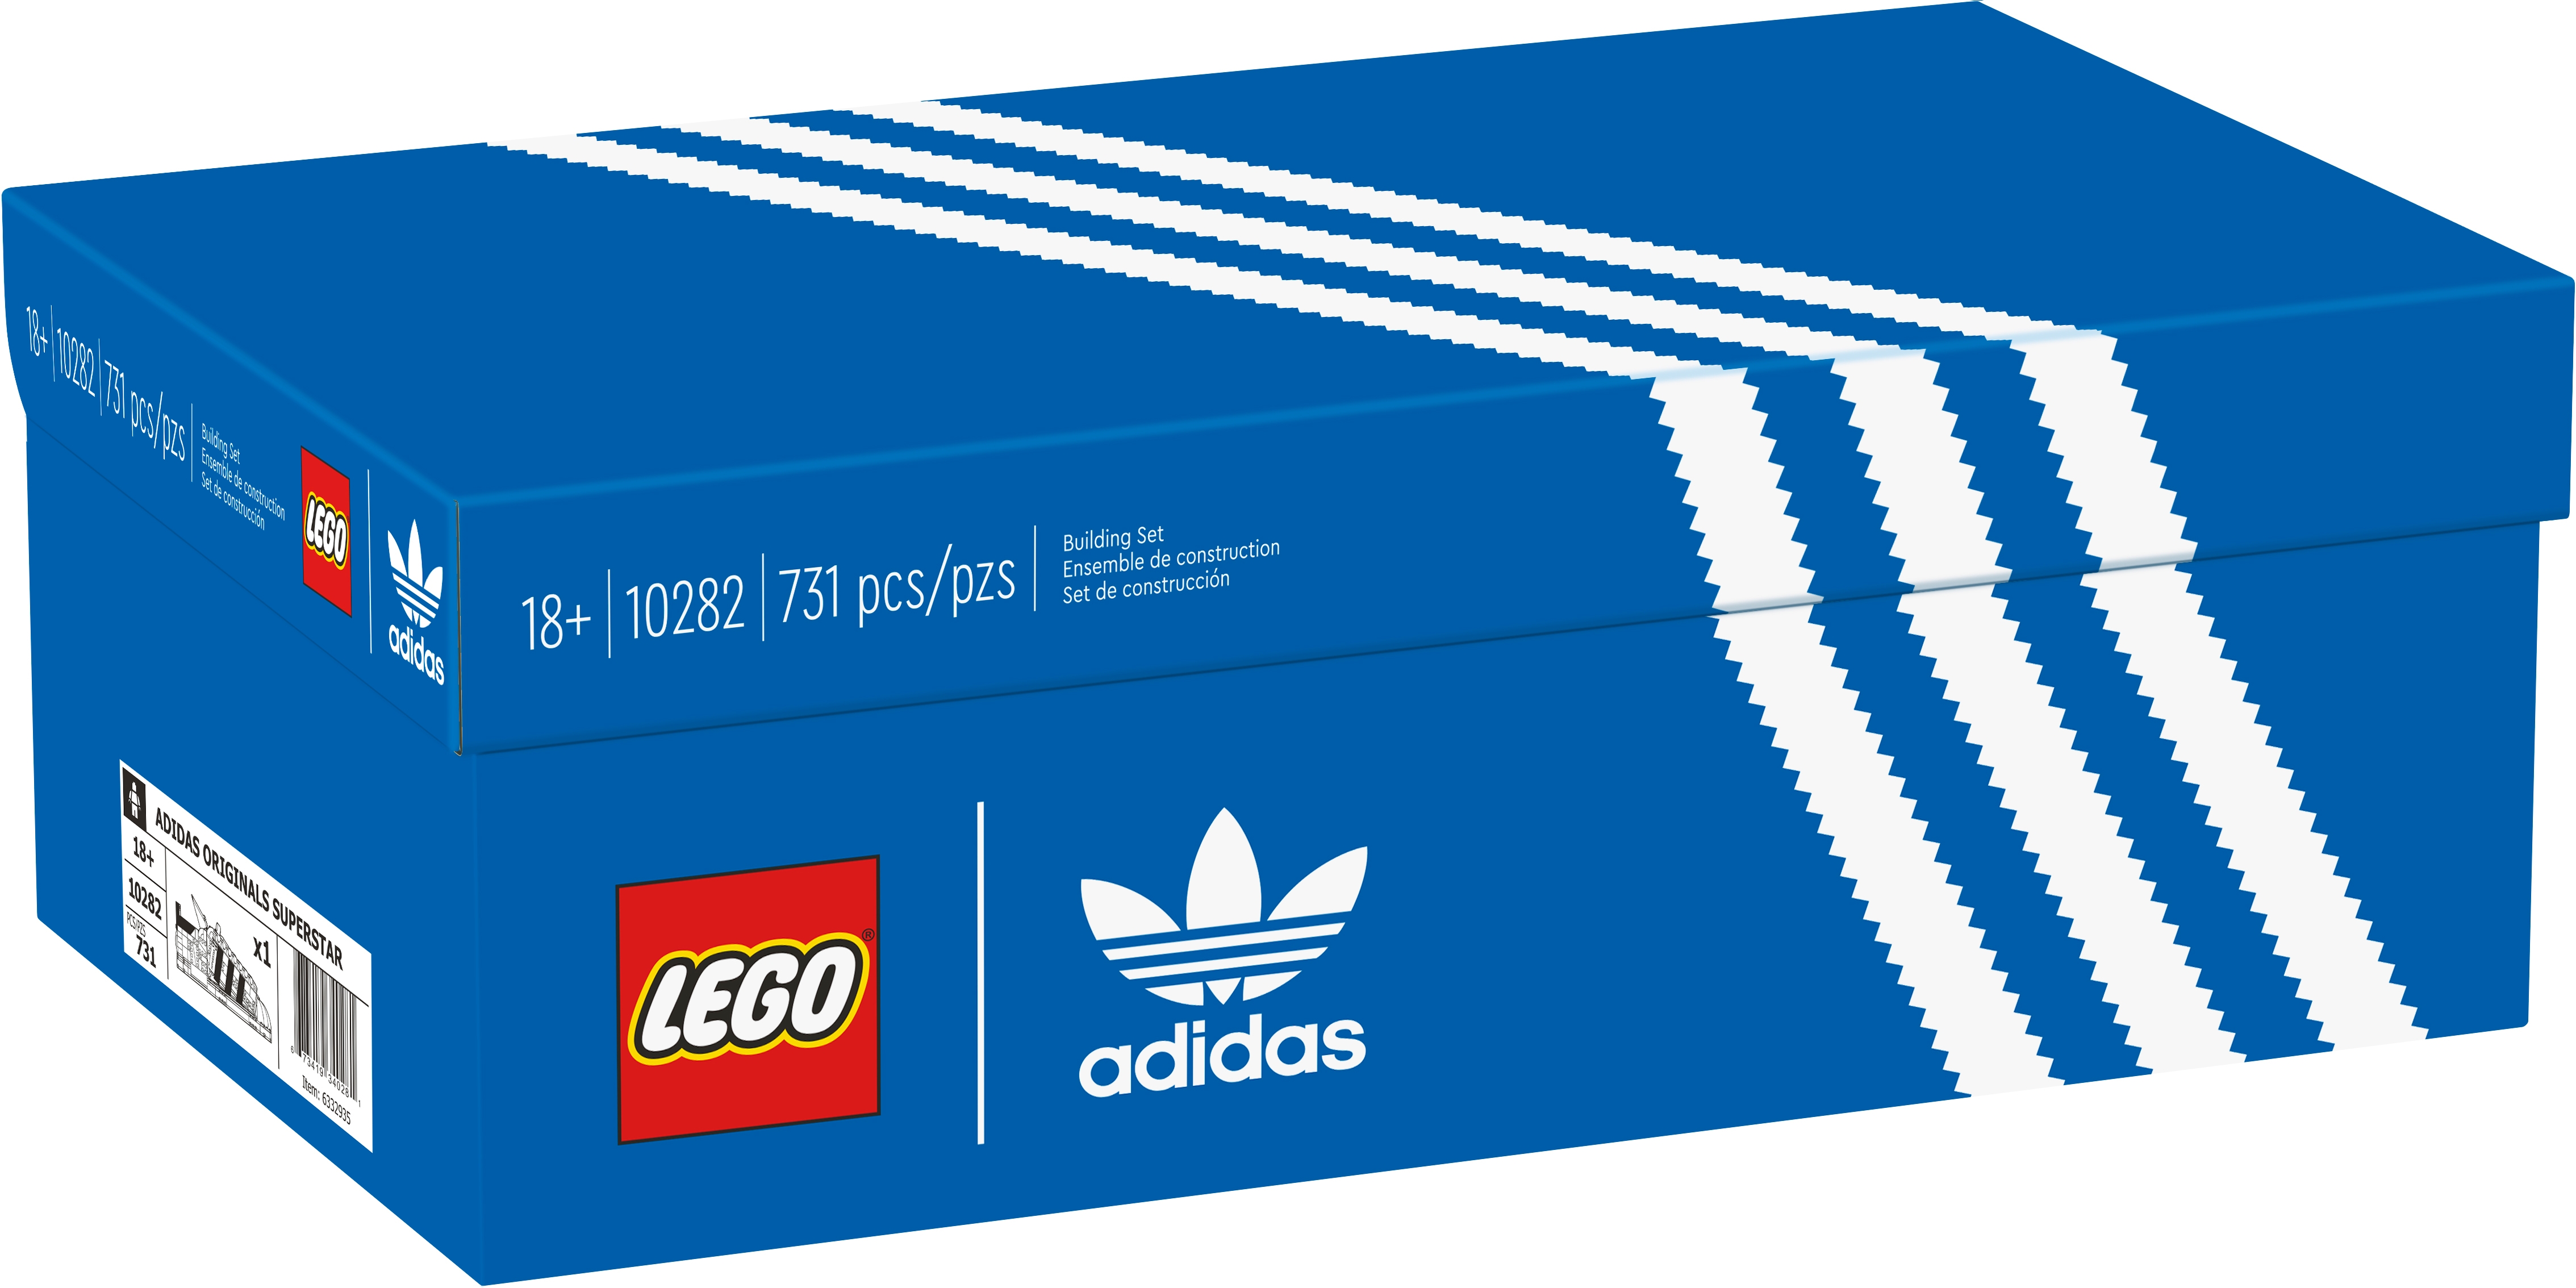 adidas Originals Superstar 10282 | Other | Buy online at the Official LEGO®  Shop FR